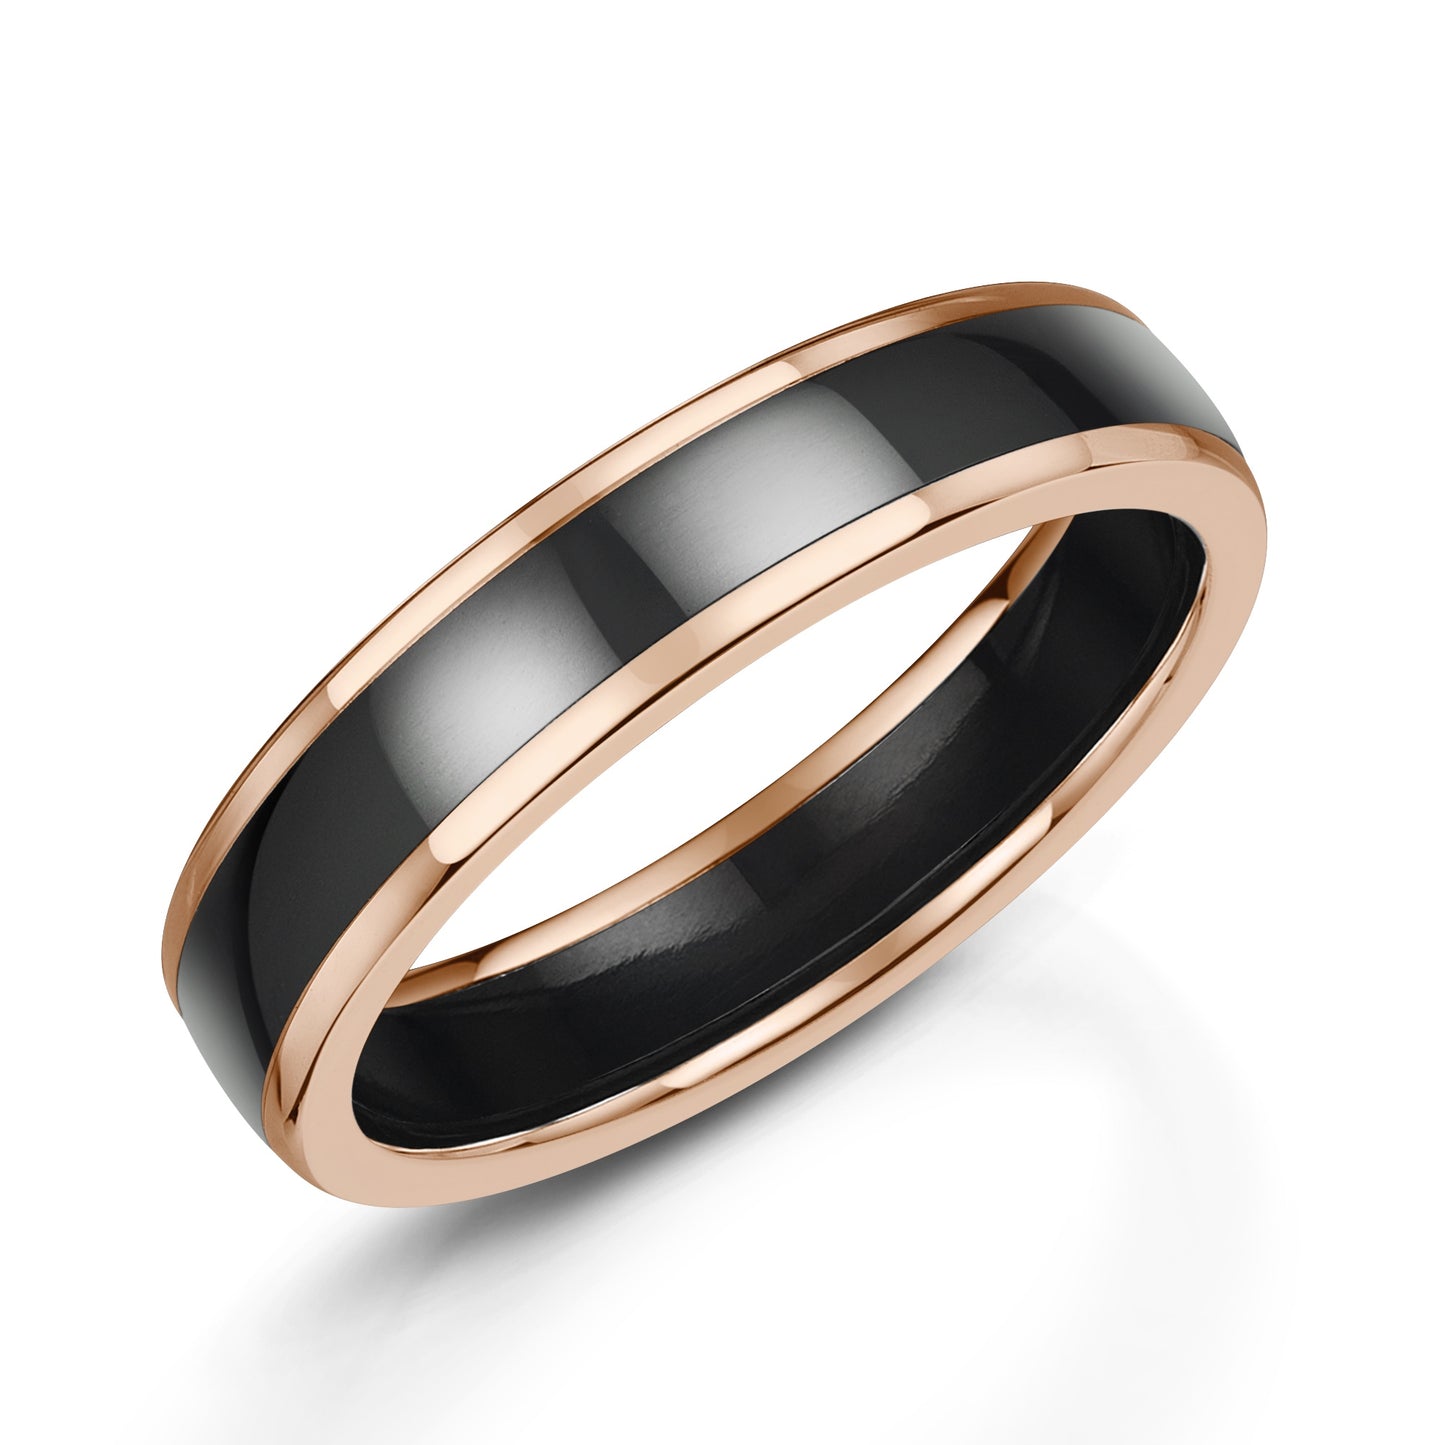 Zedd ring Black Zirconium 5mm ring with 9ct Rose Gold edging